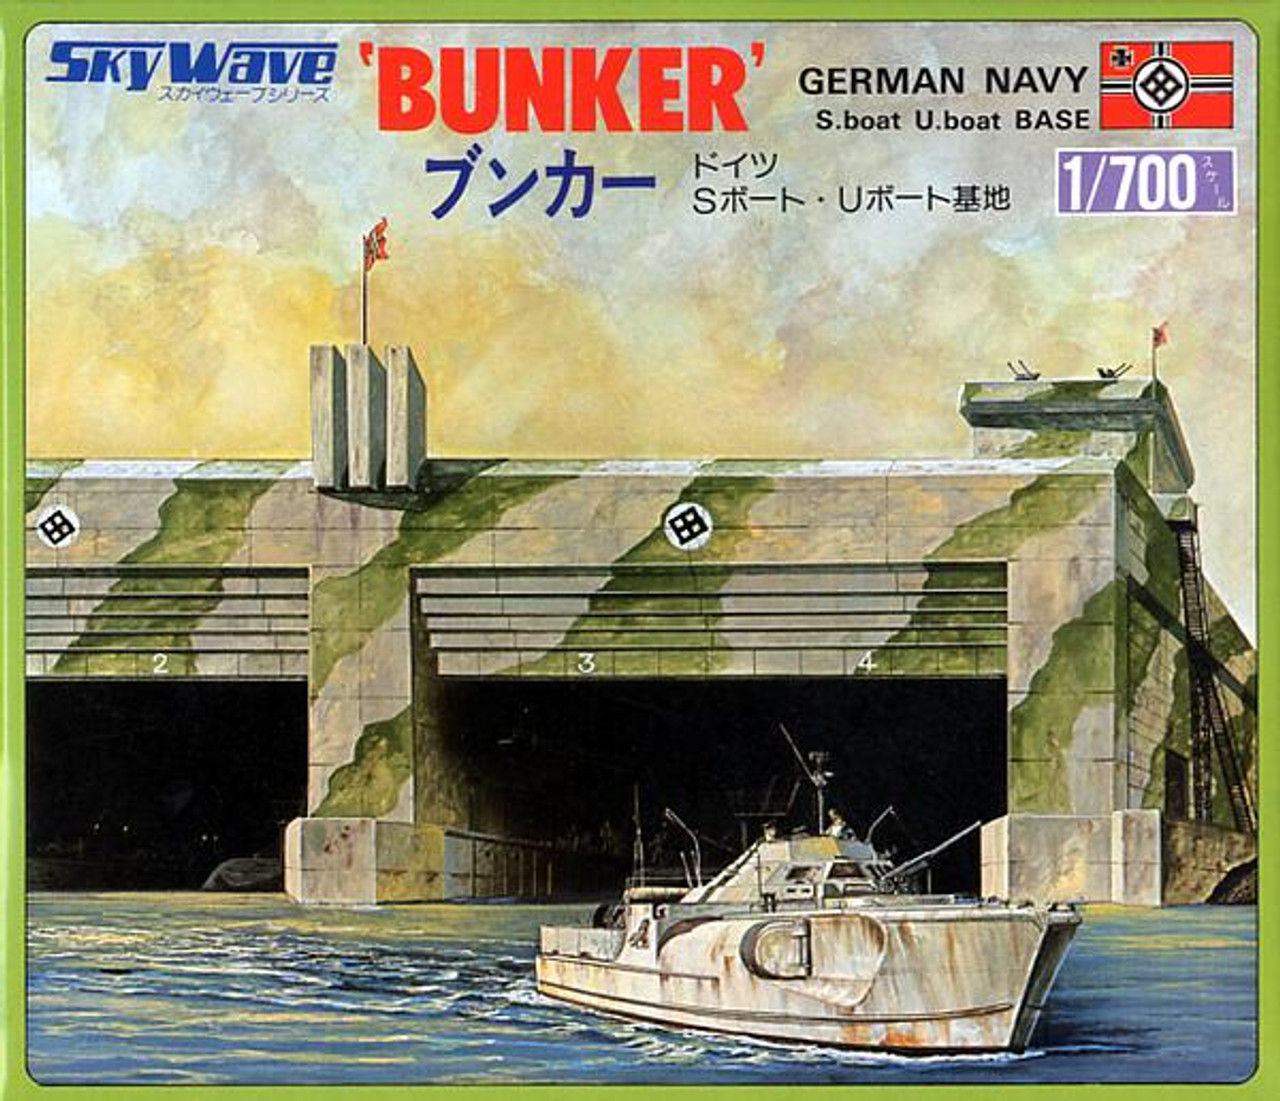 PITSW05 Pitroad 1/700 Scale Bunker (German Navy S-boat U-boat Base)  MMD Squadron